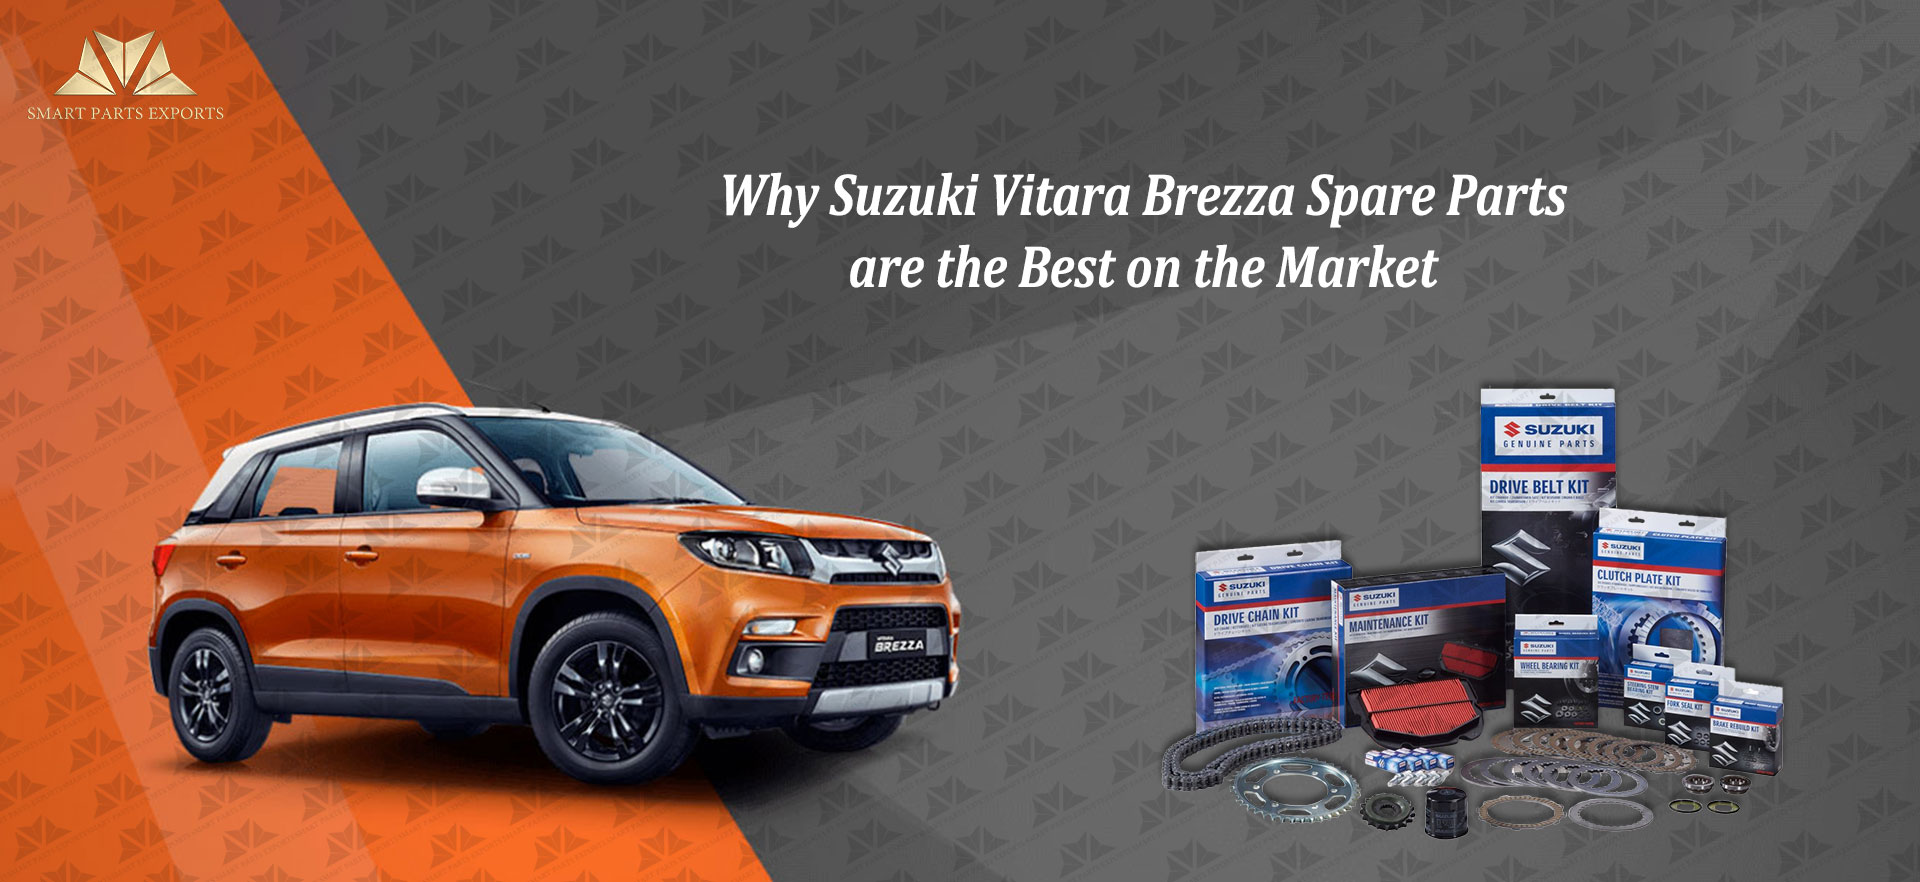 Why Suzuki Vitara Brezza Spare Parts are the Best on the Market